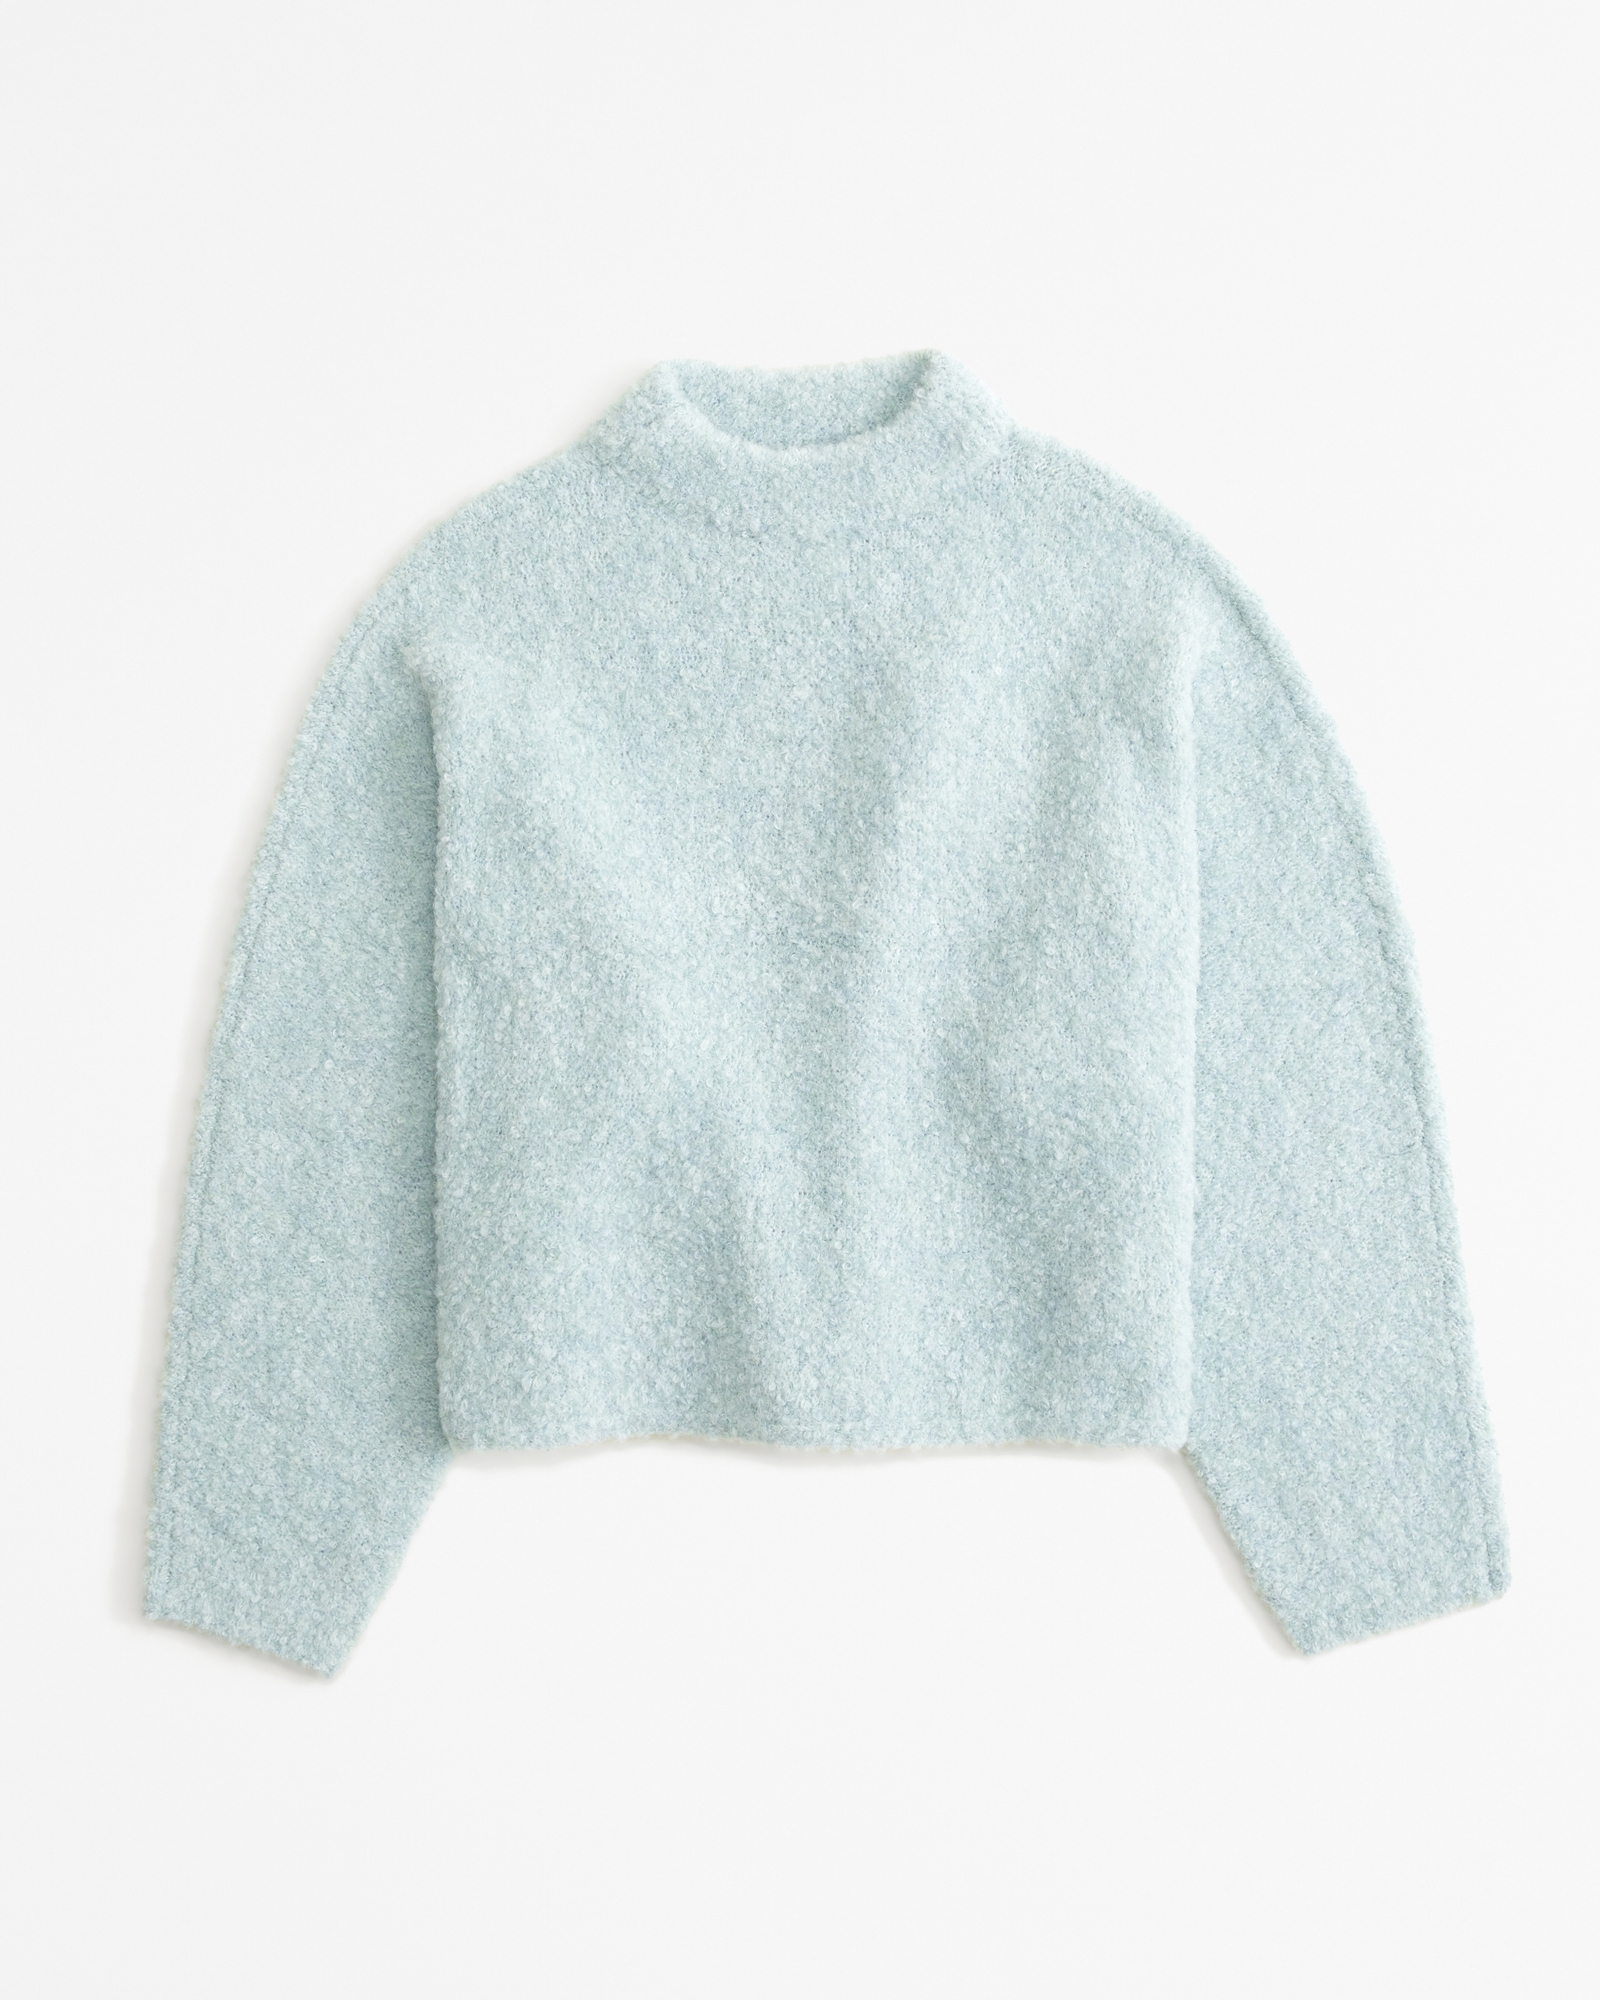 Mockneck Dolman Sweater